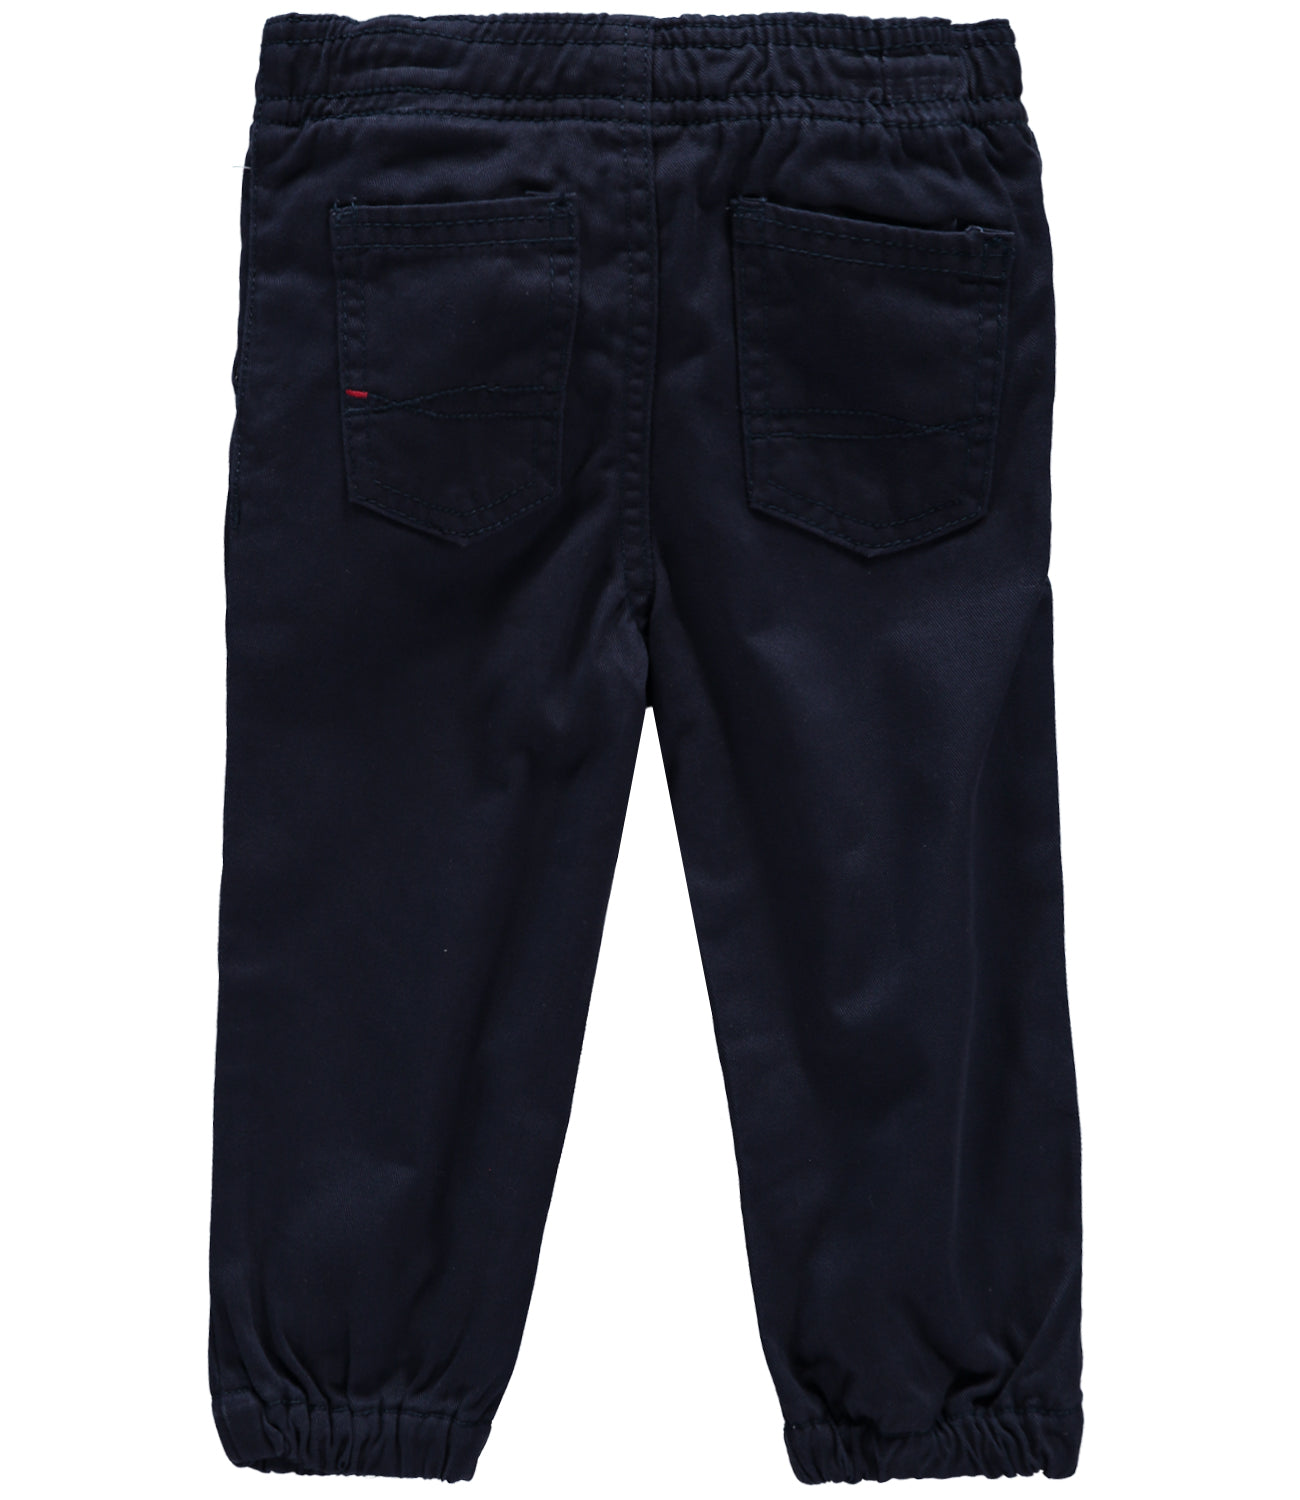 Tommy Hilfiger Boys 12-24 Months Woven Pant Set